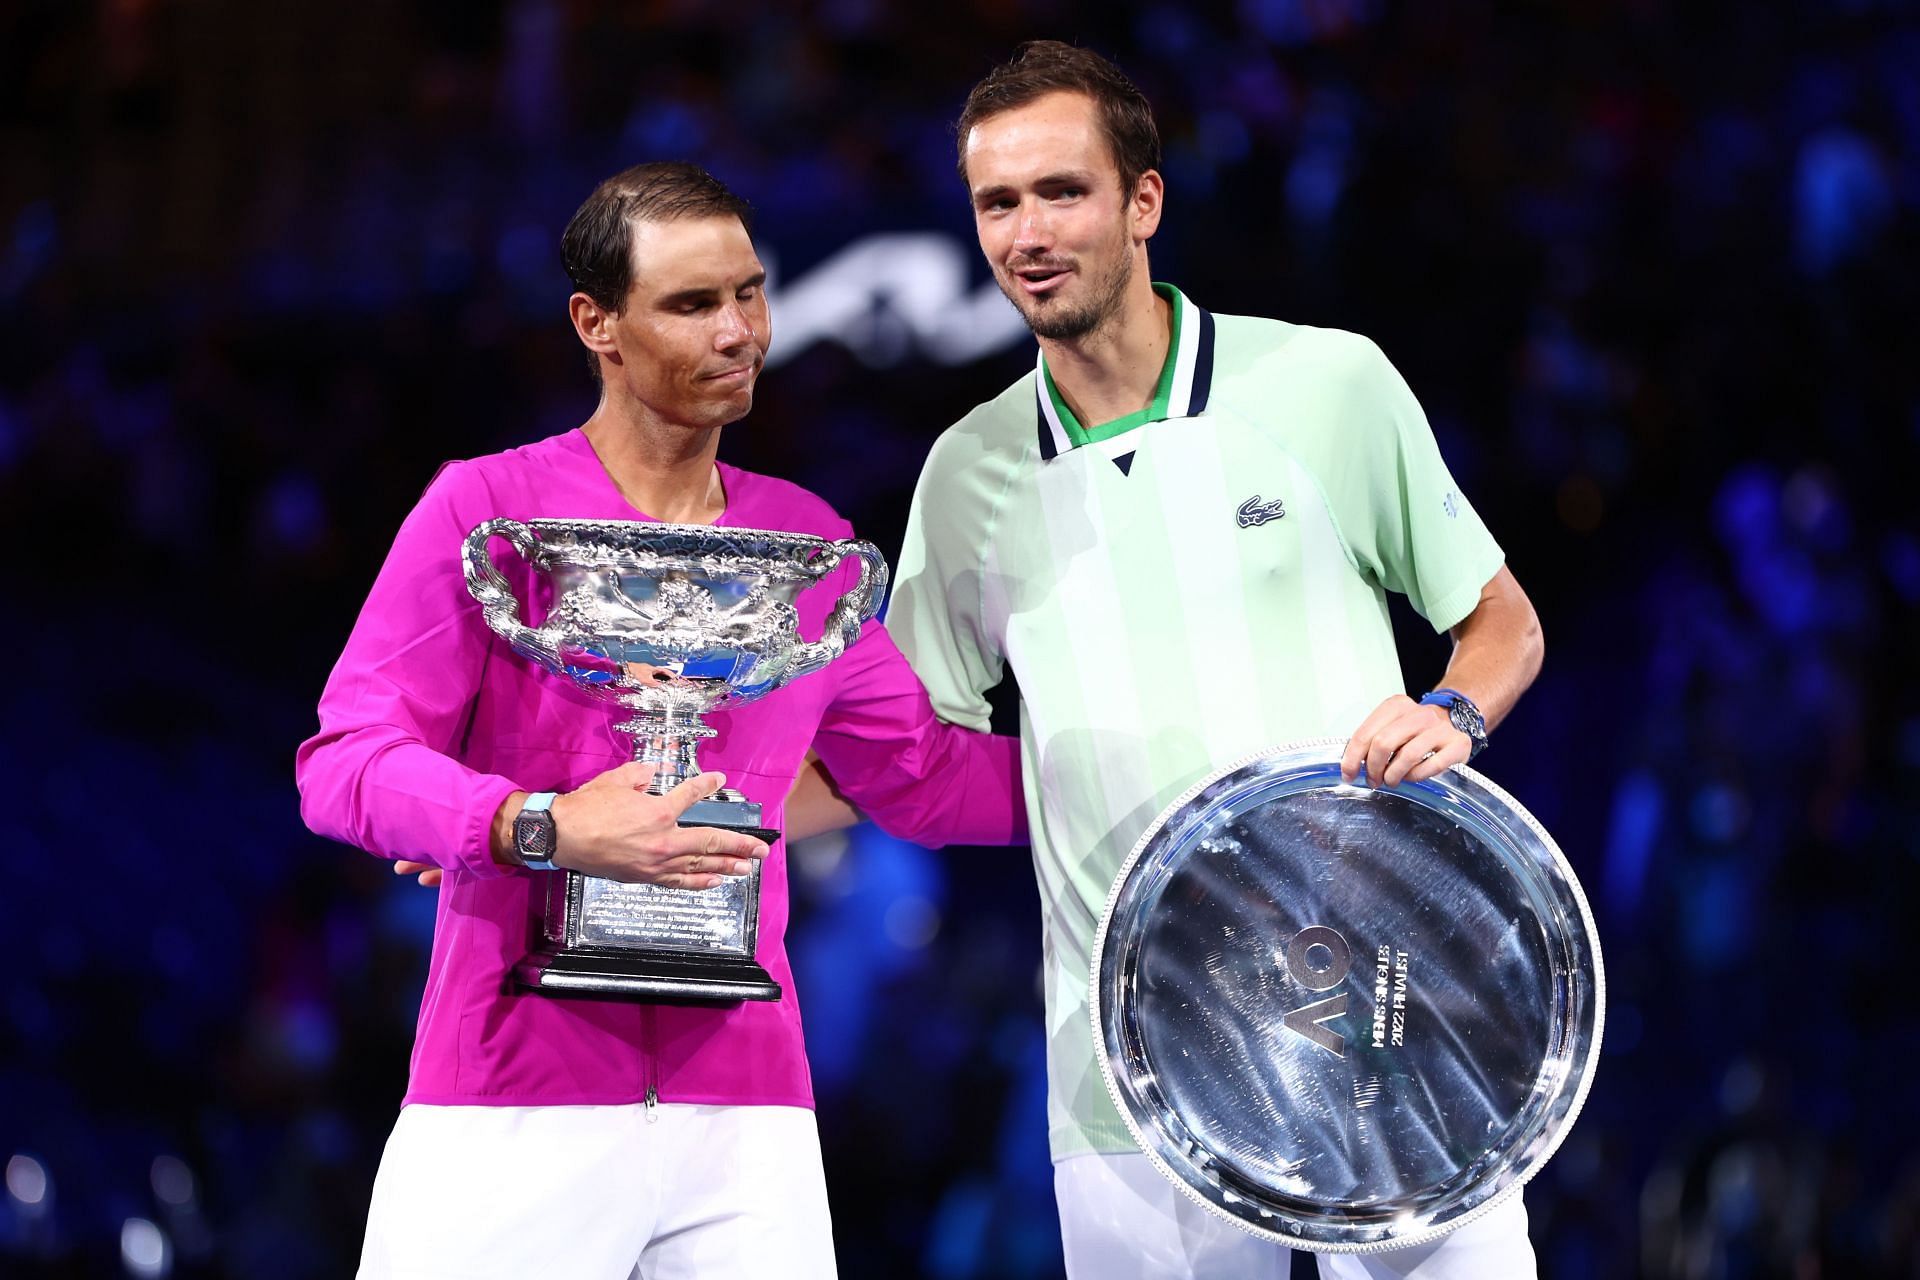 Rafael Nadal prevented Daniil Medvedev from winning his second consecutive Grand Slam